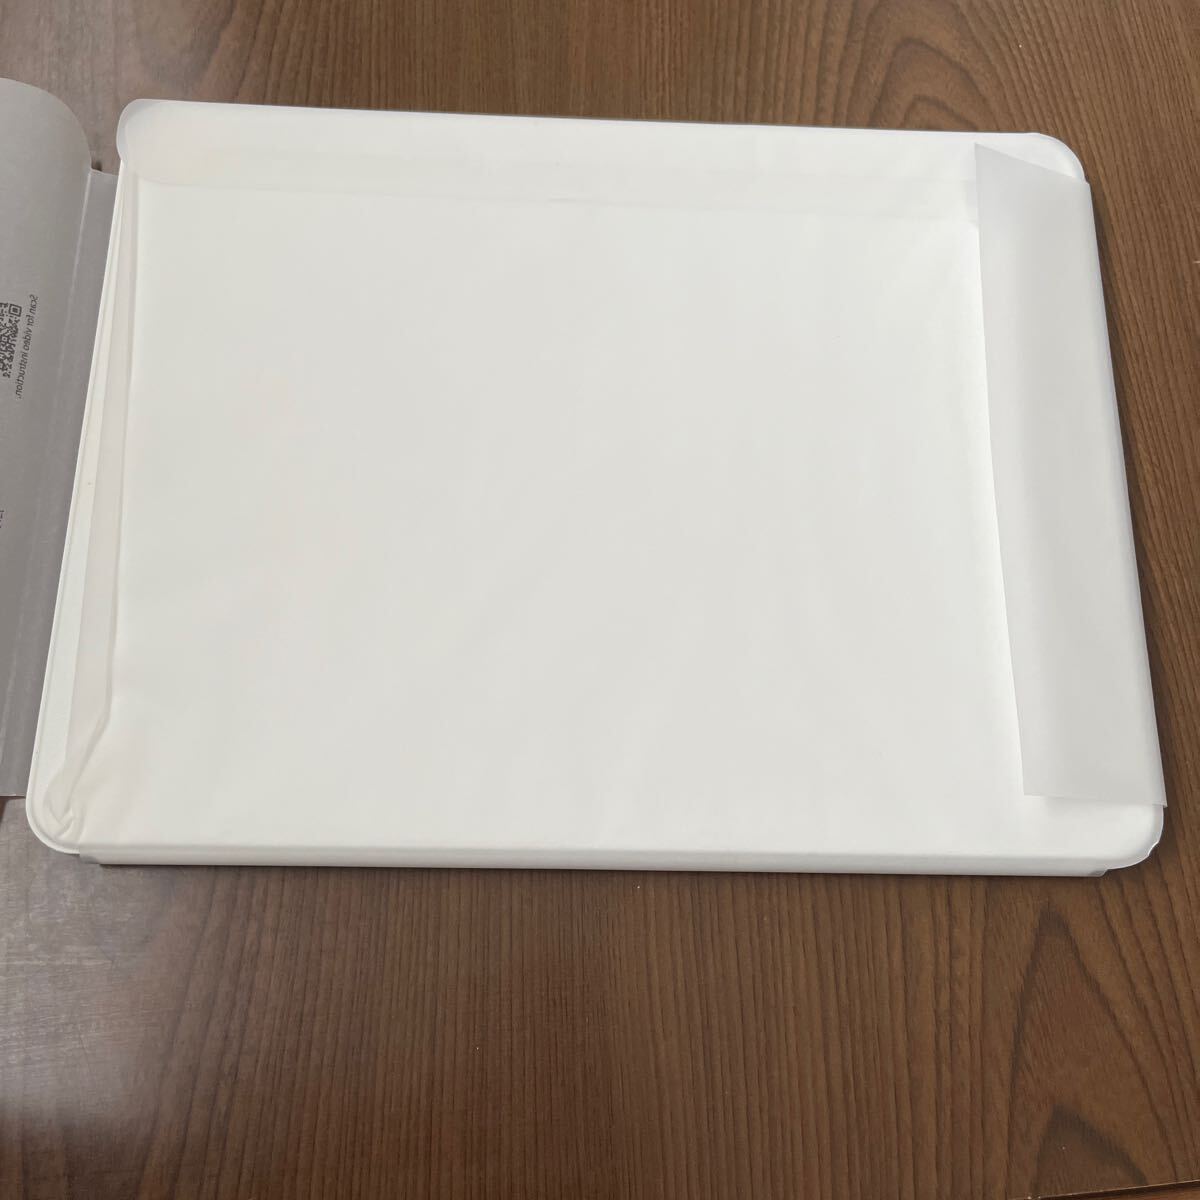 605p0619☆ PITAKA iPad Pro 12.9 ケース タブレットスタンド 磁気吸着 超スリム 軽量 極薄 衝撃保護 折りたたみ 角度調整可能 _画像8